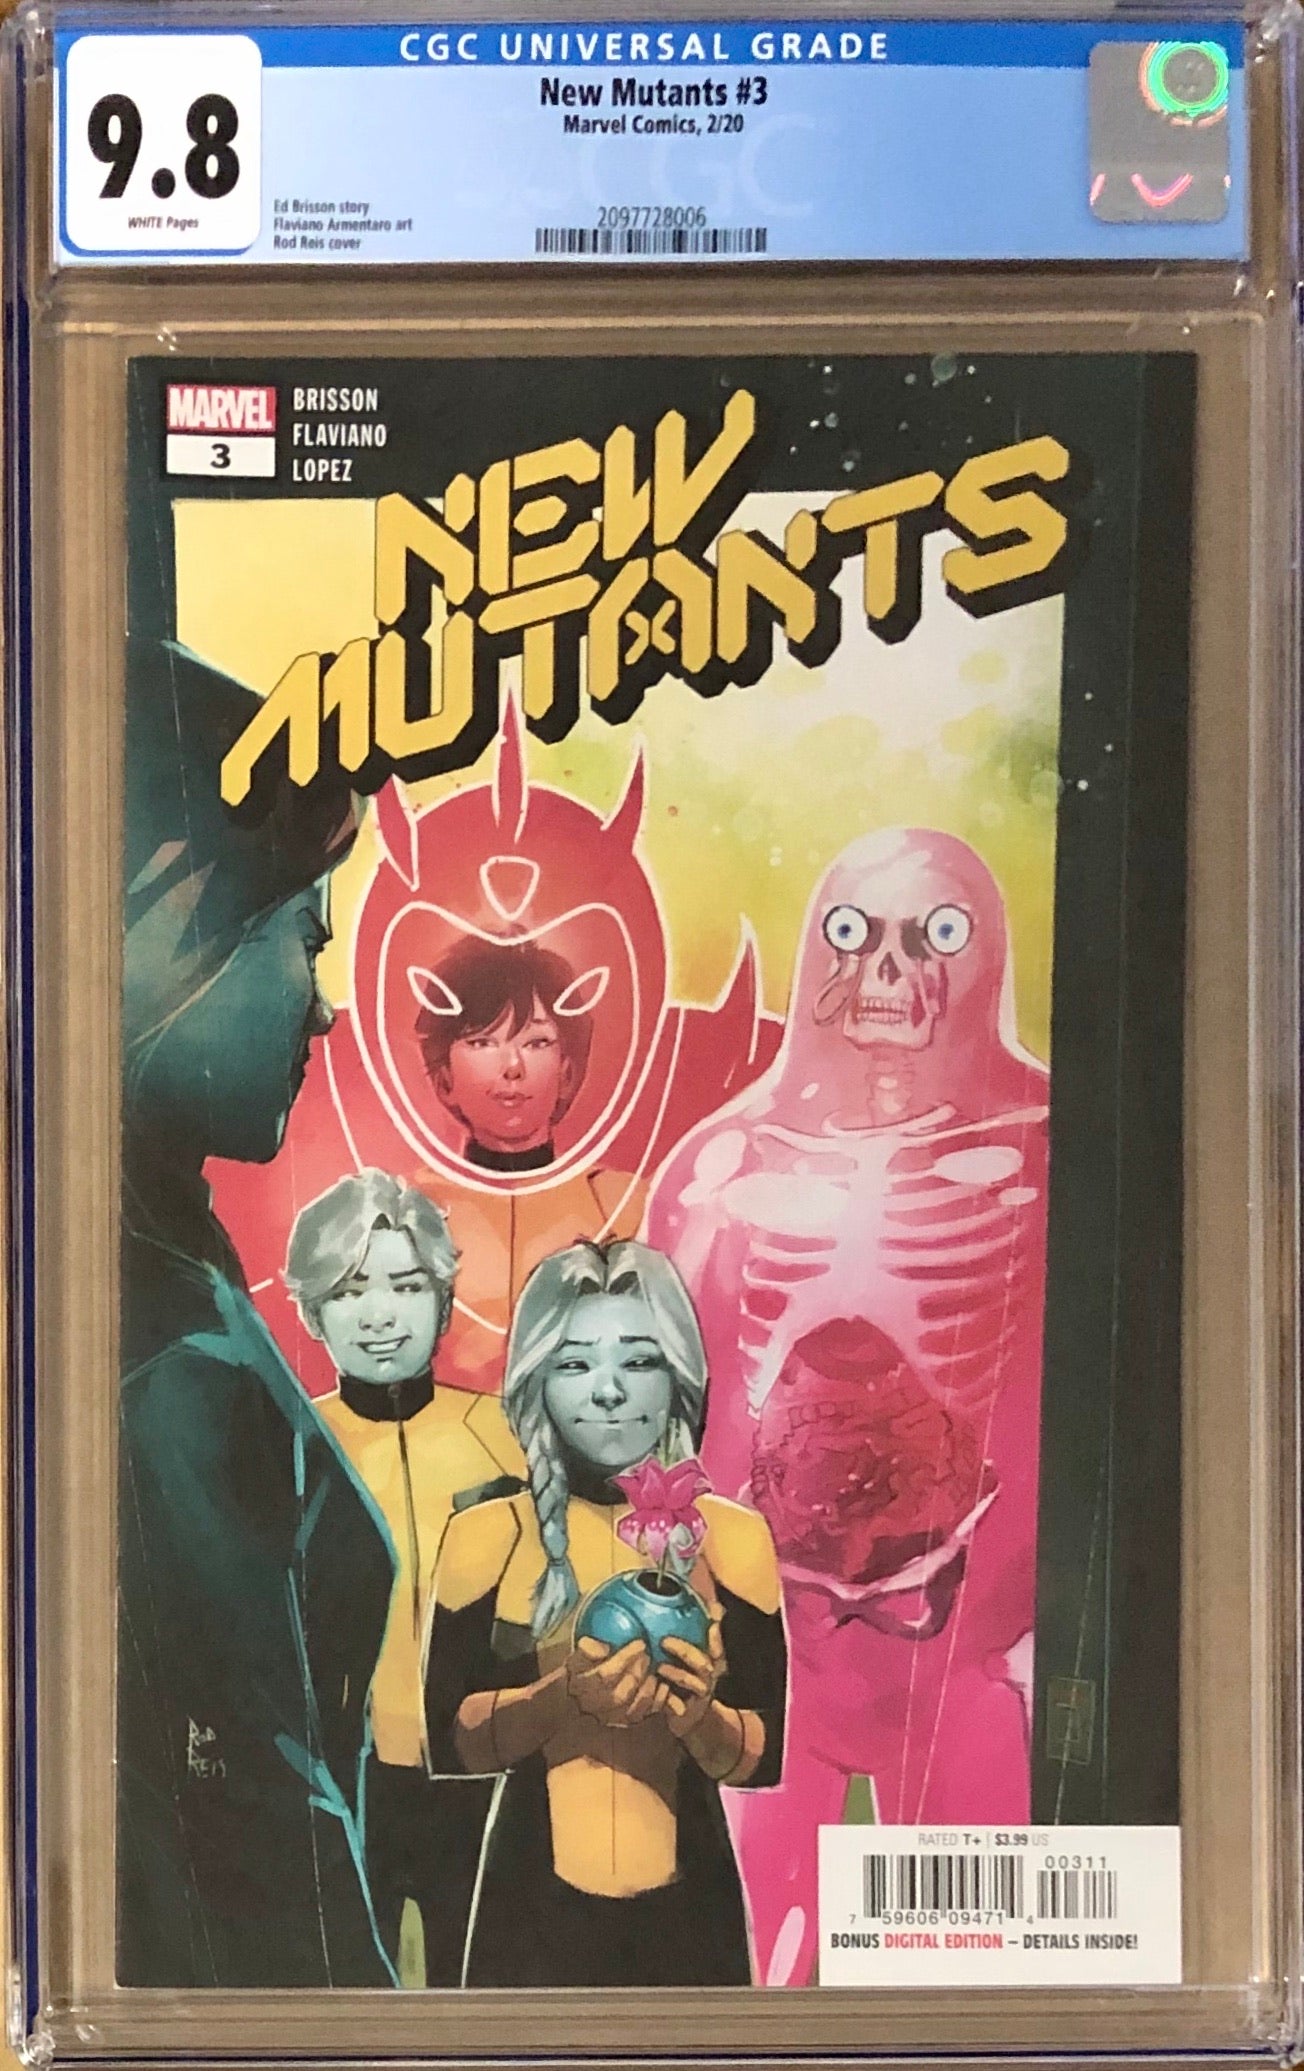 New Mutants #3 CGC 9.8 - Dawn of X!